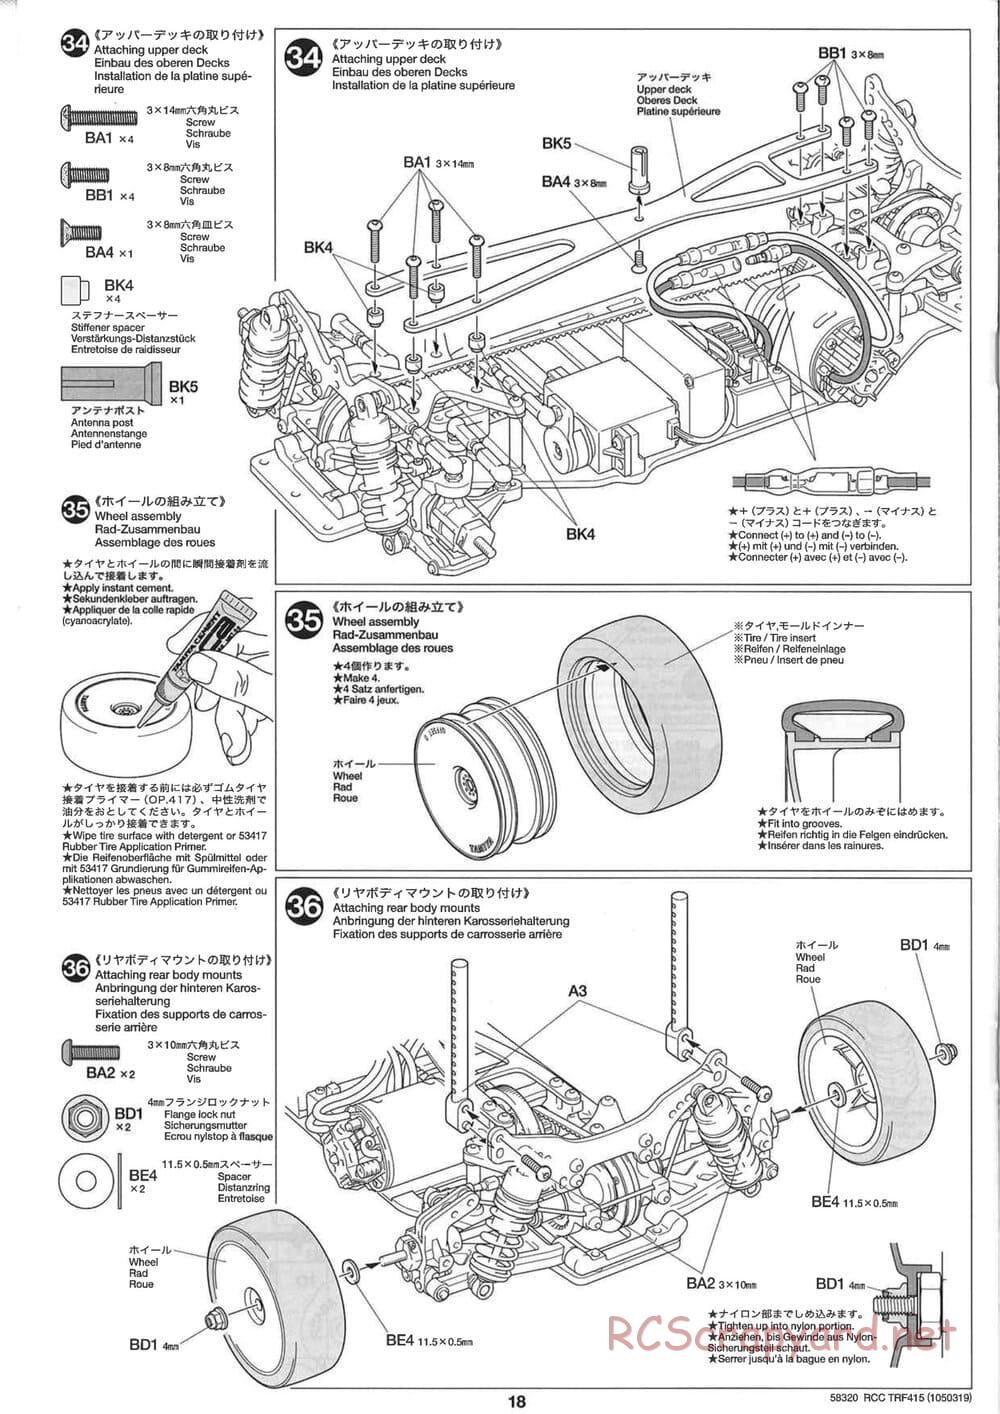 Tamiya - TRF415 Chassis - Manual - Page 18